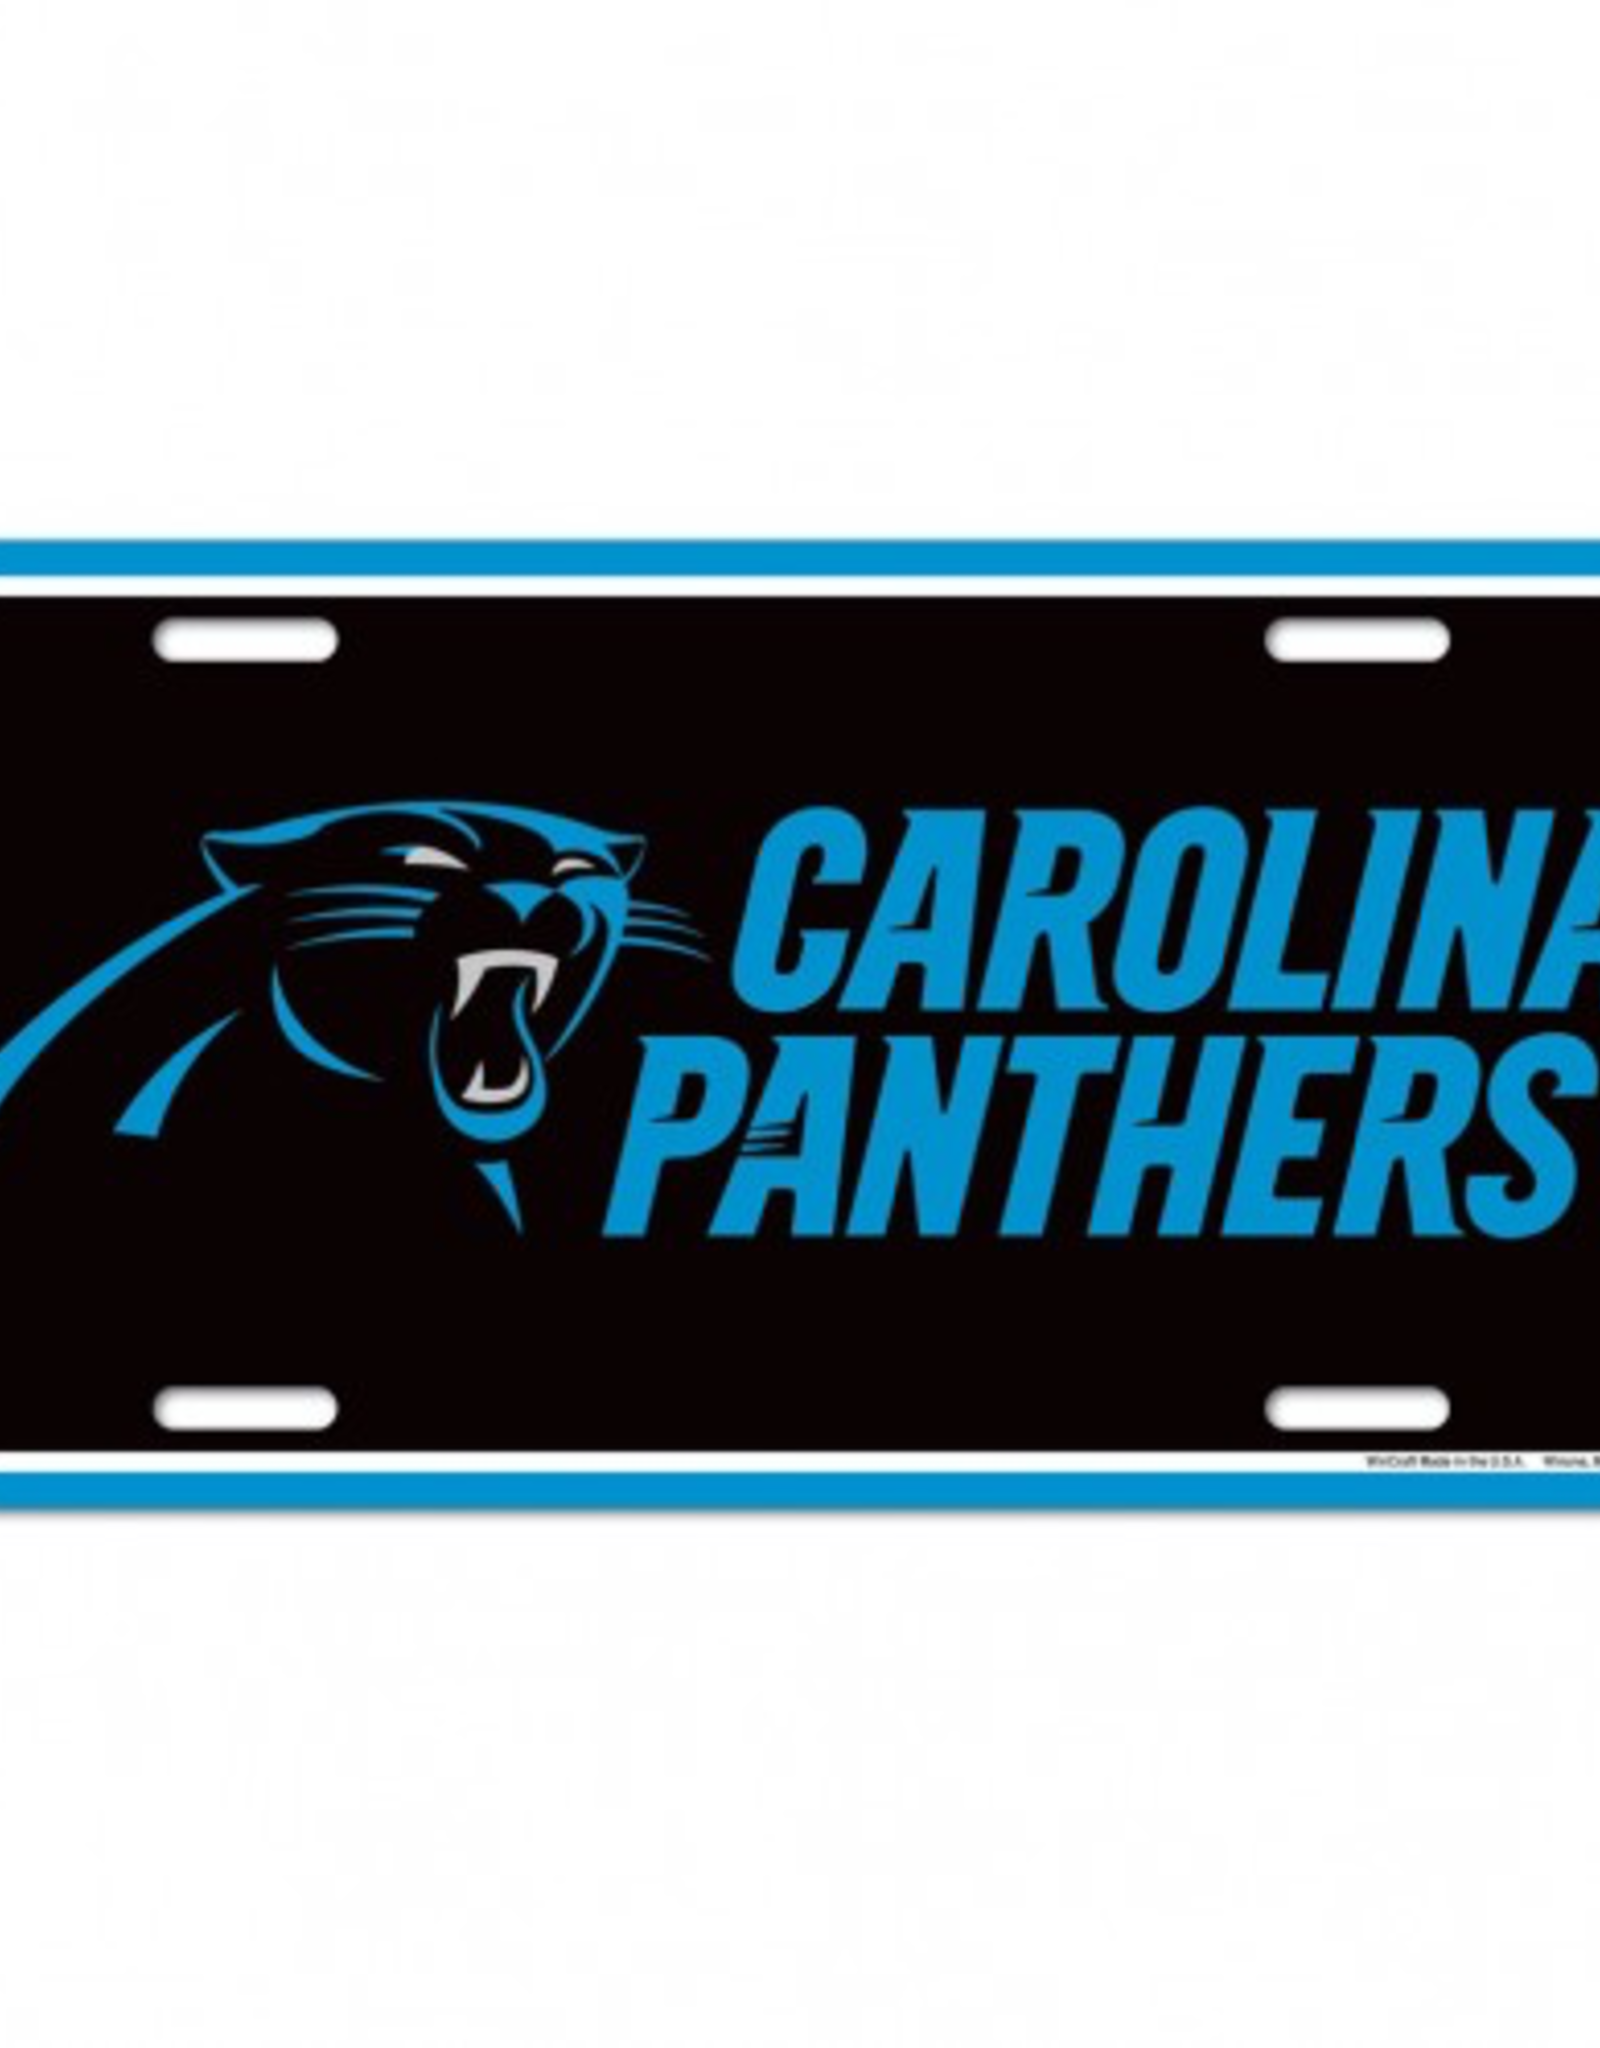 WINCRAFT Carolina Panthers License Plate